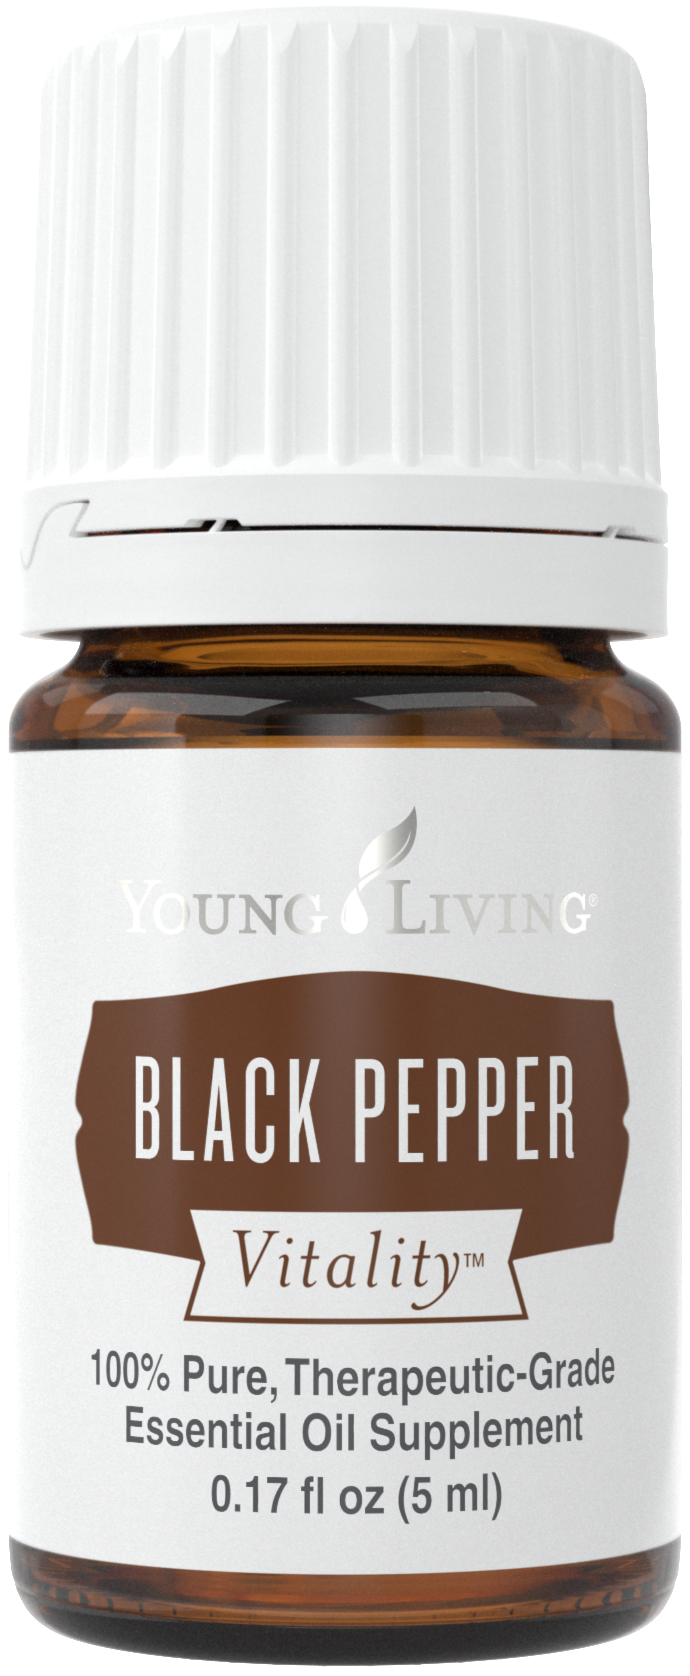 Black Pepper Vitality Silo.png